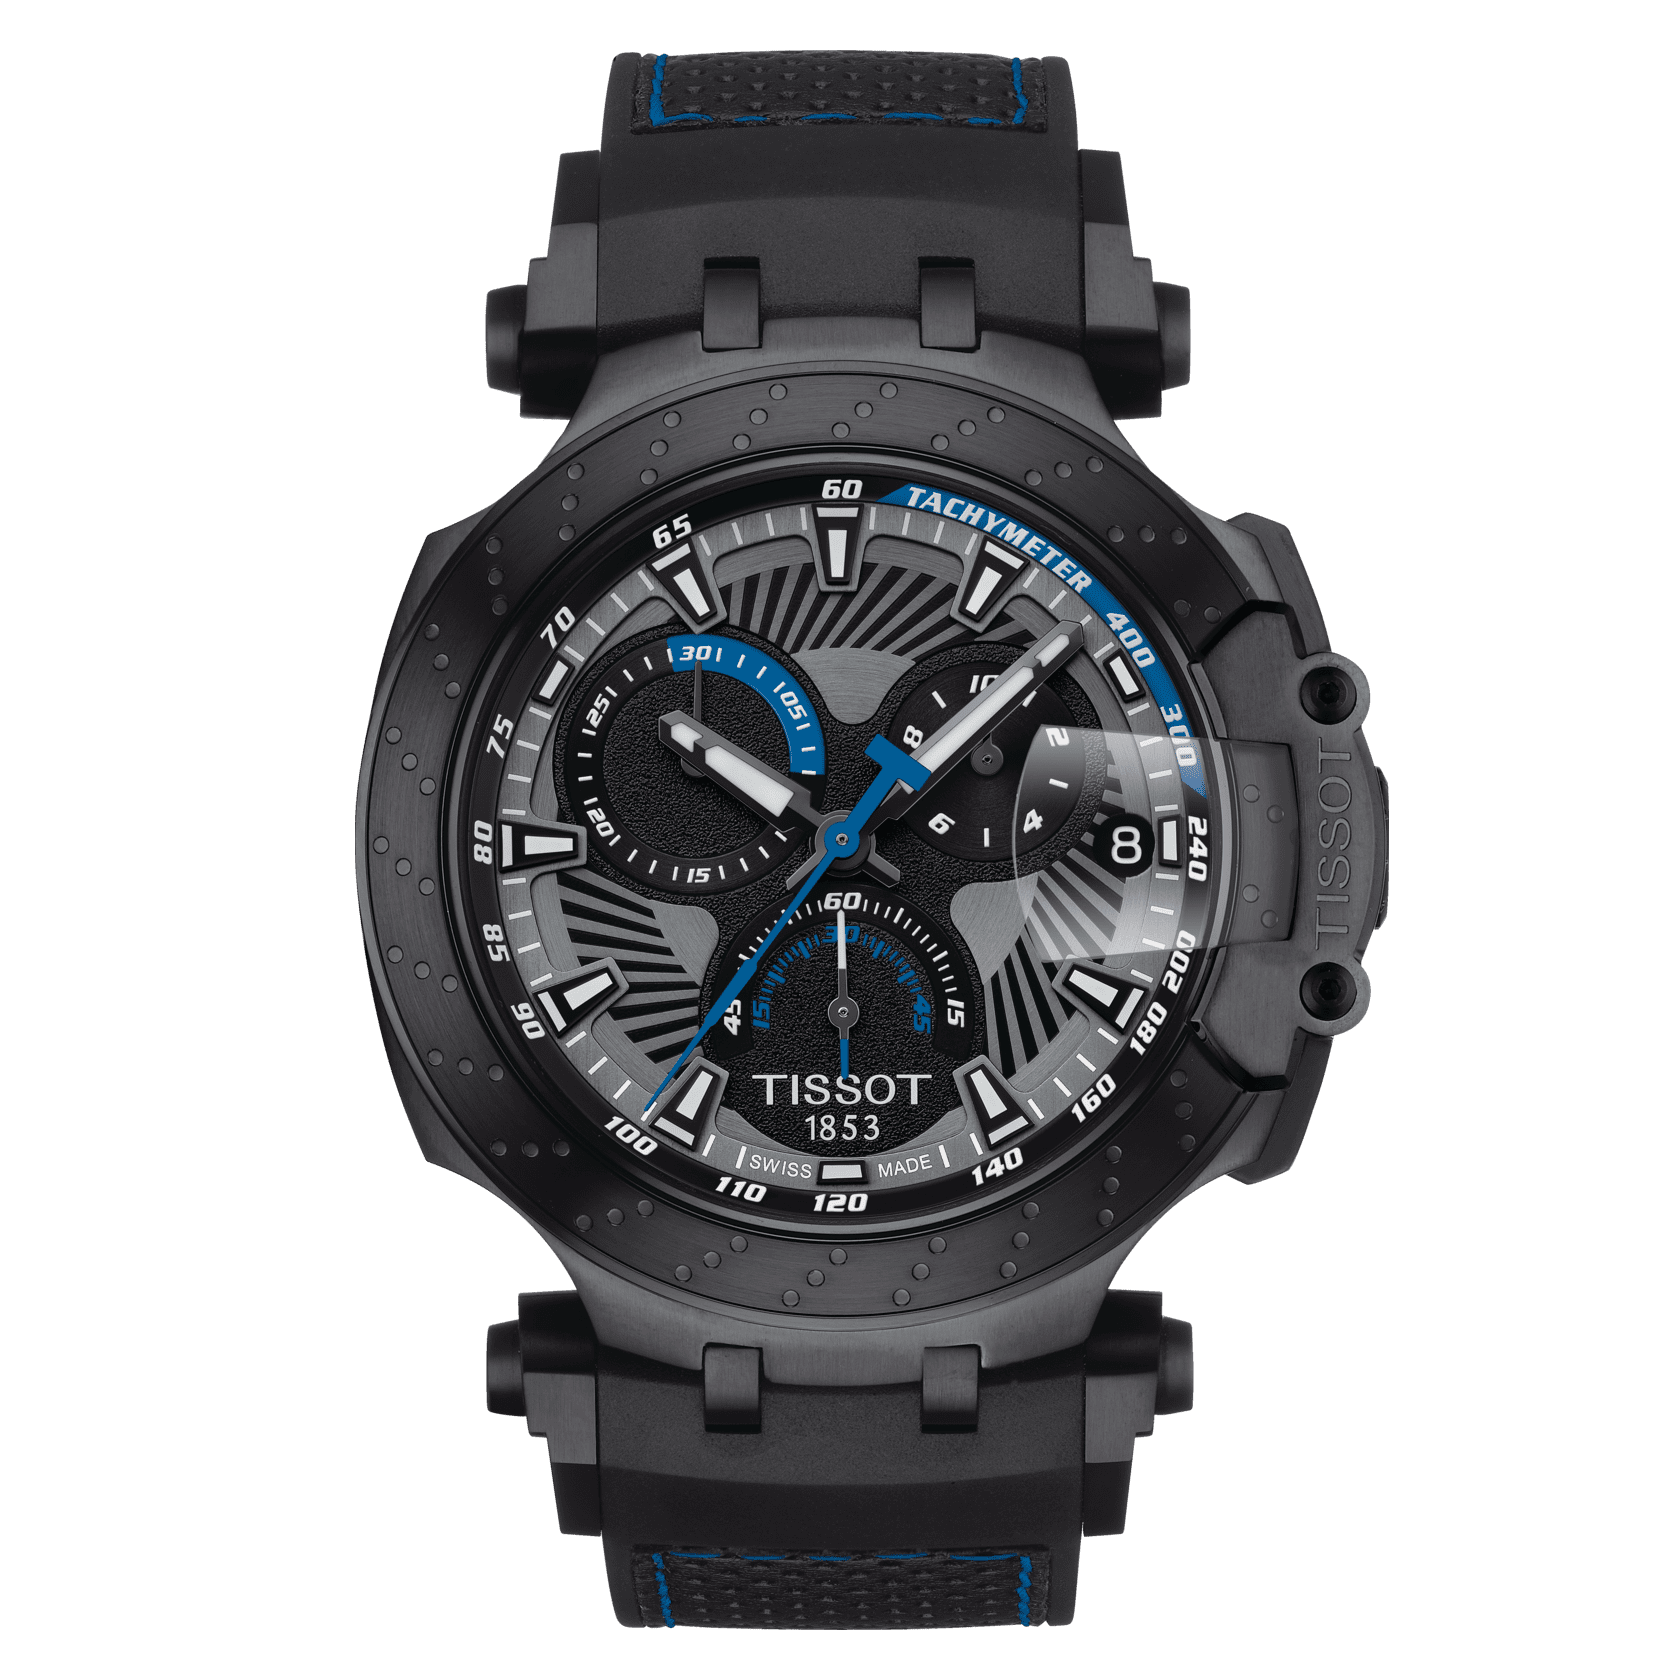 Luxury Swiss Movement Replica Watch